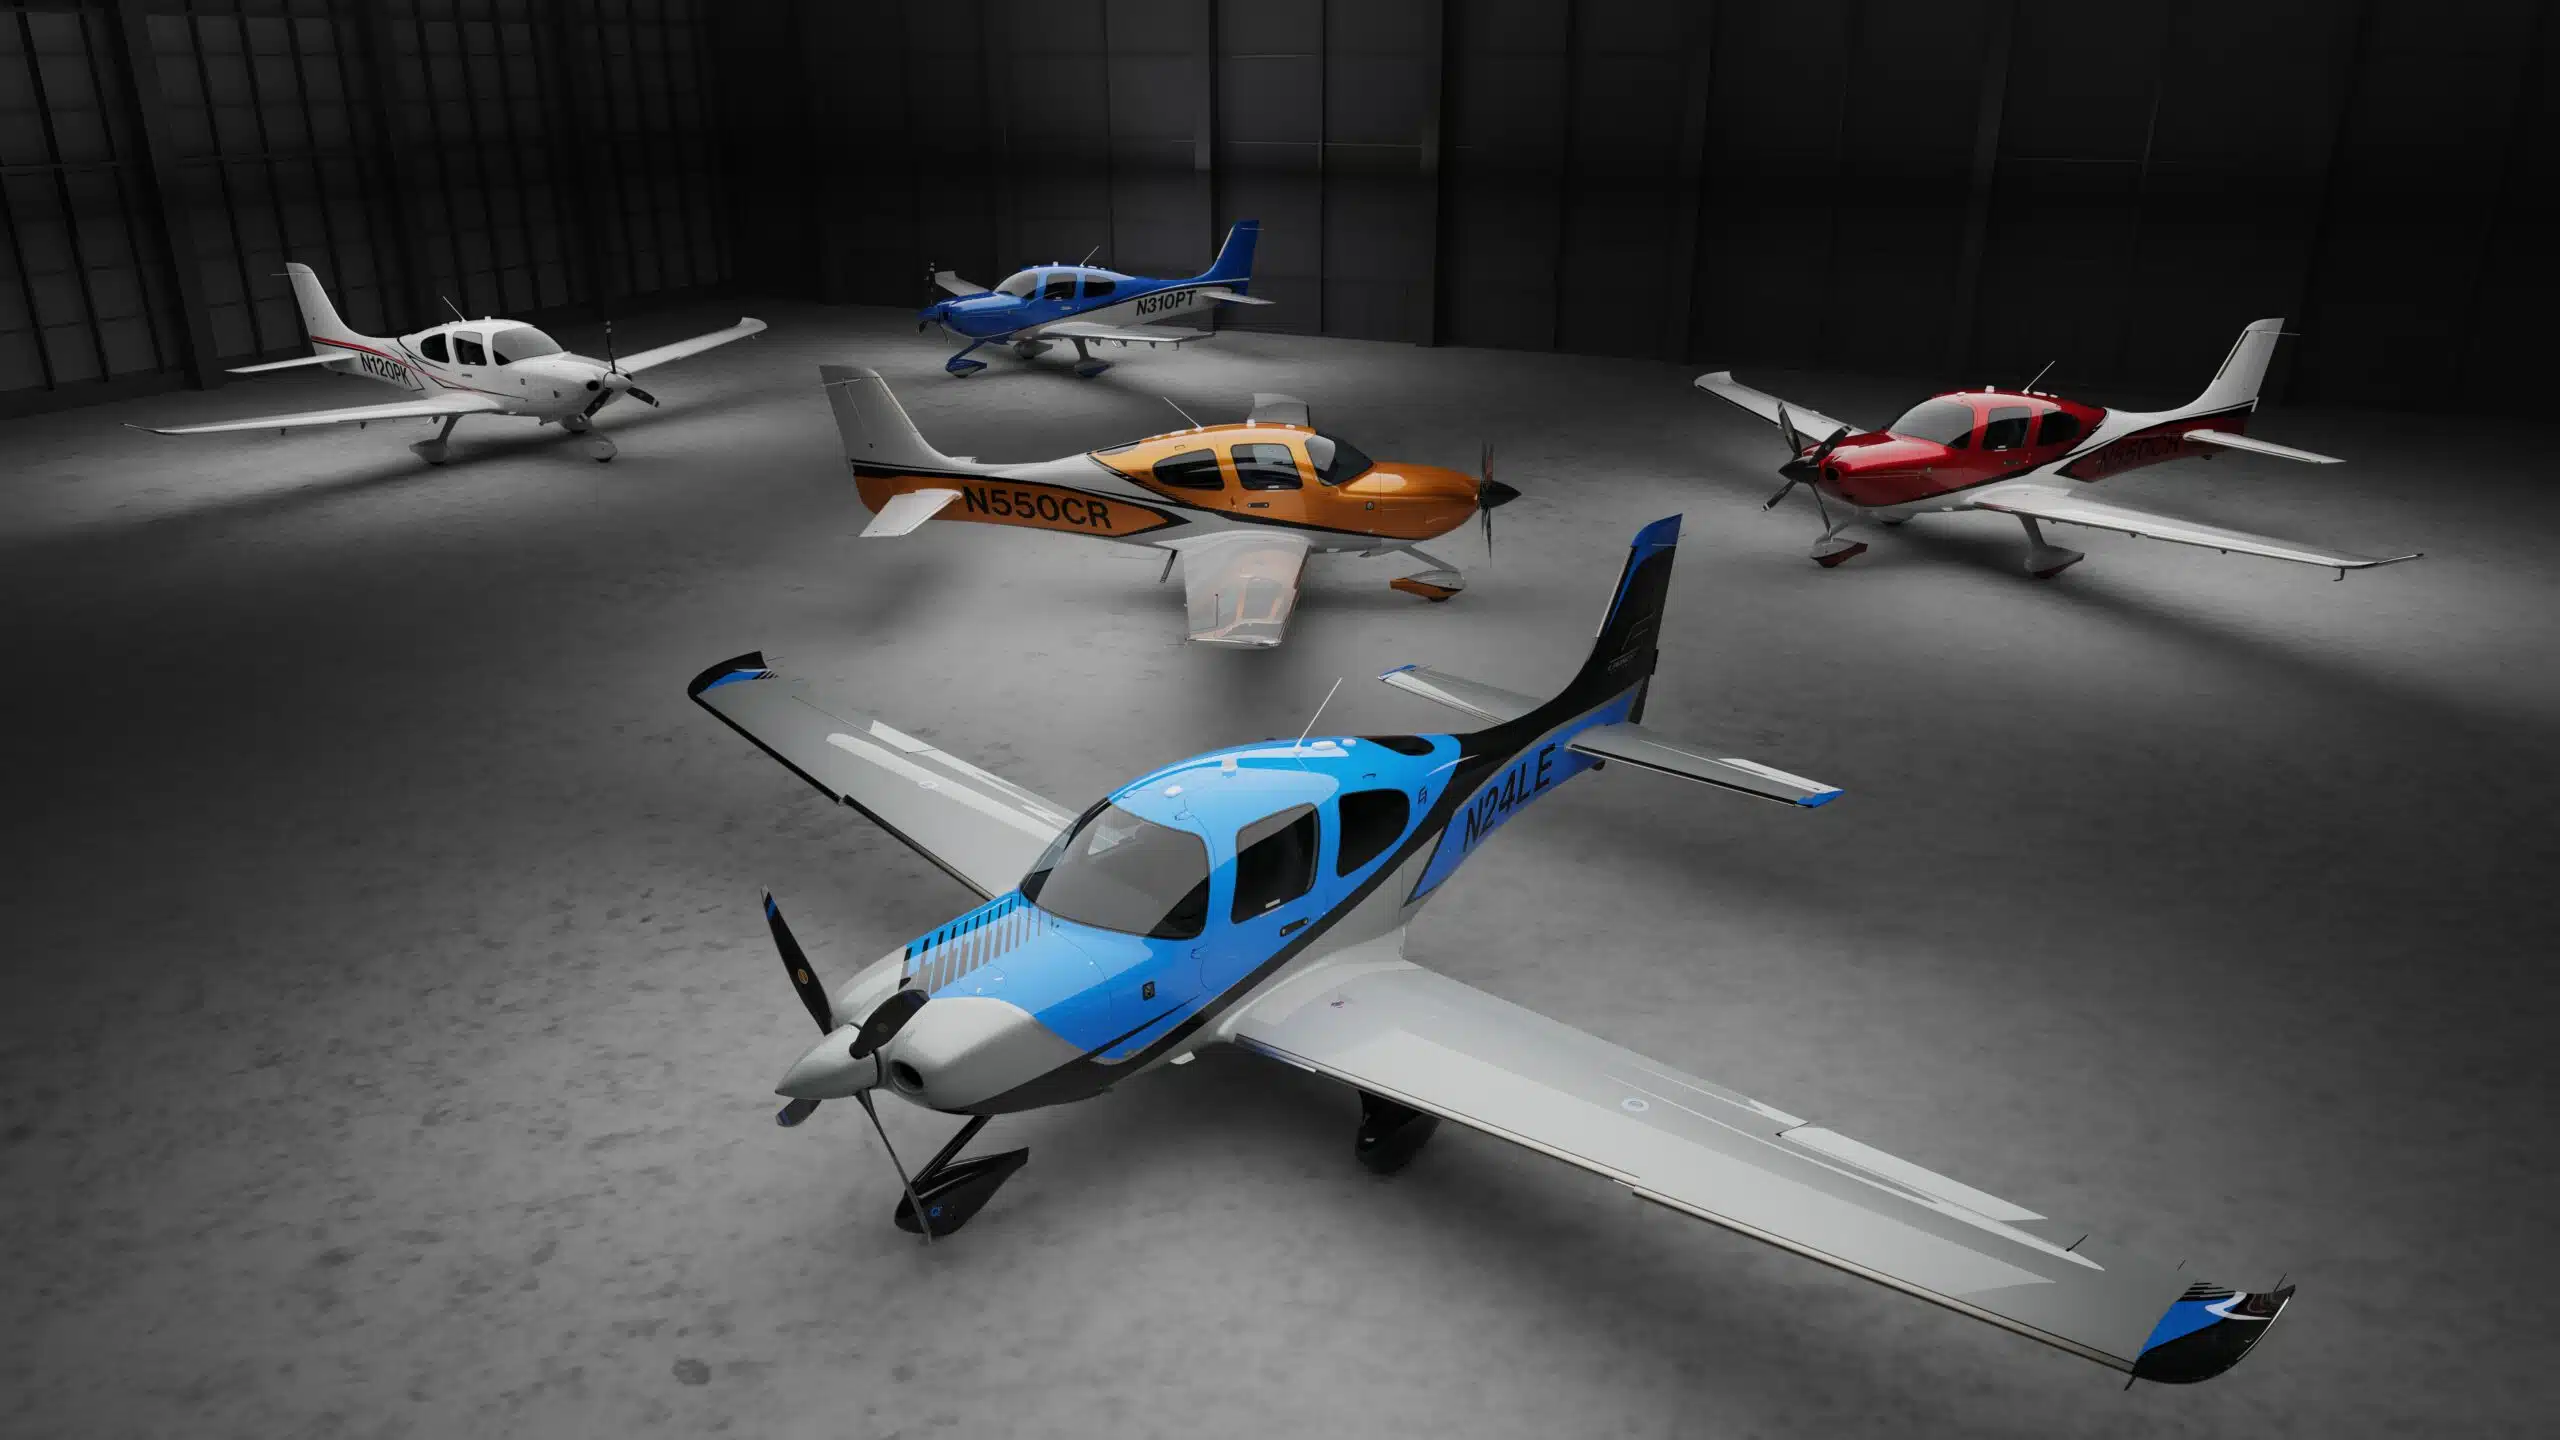 Five Cirrus planes in hangar, blue SR Series in front.